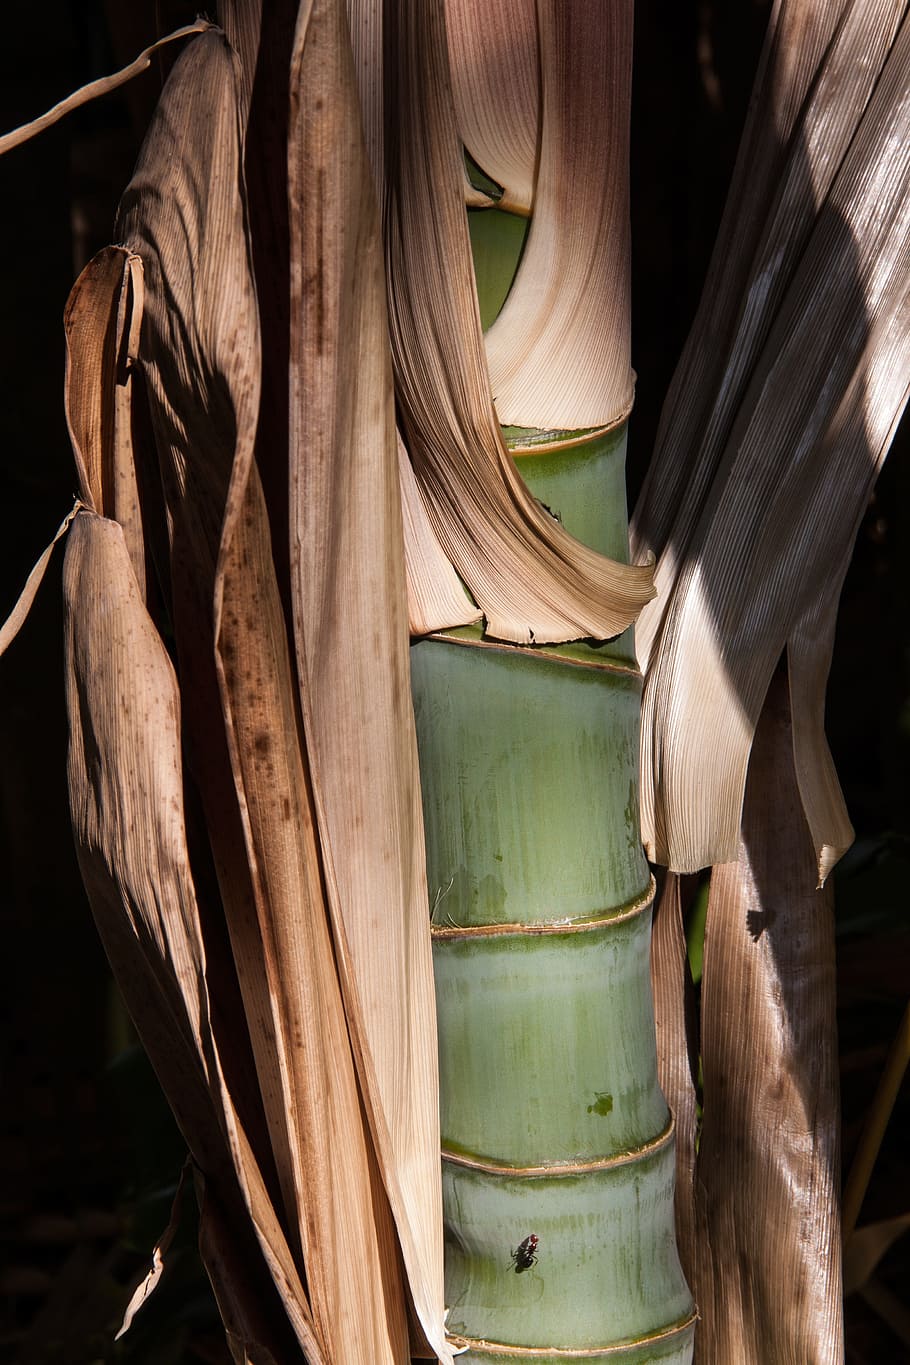 green bamboo, bamboo, bamboo shoot, grass, bamboo plants, grasartig, lignifying, airy, petite, leaf crowns